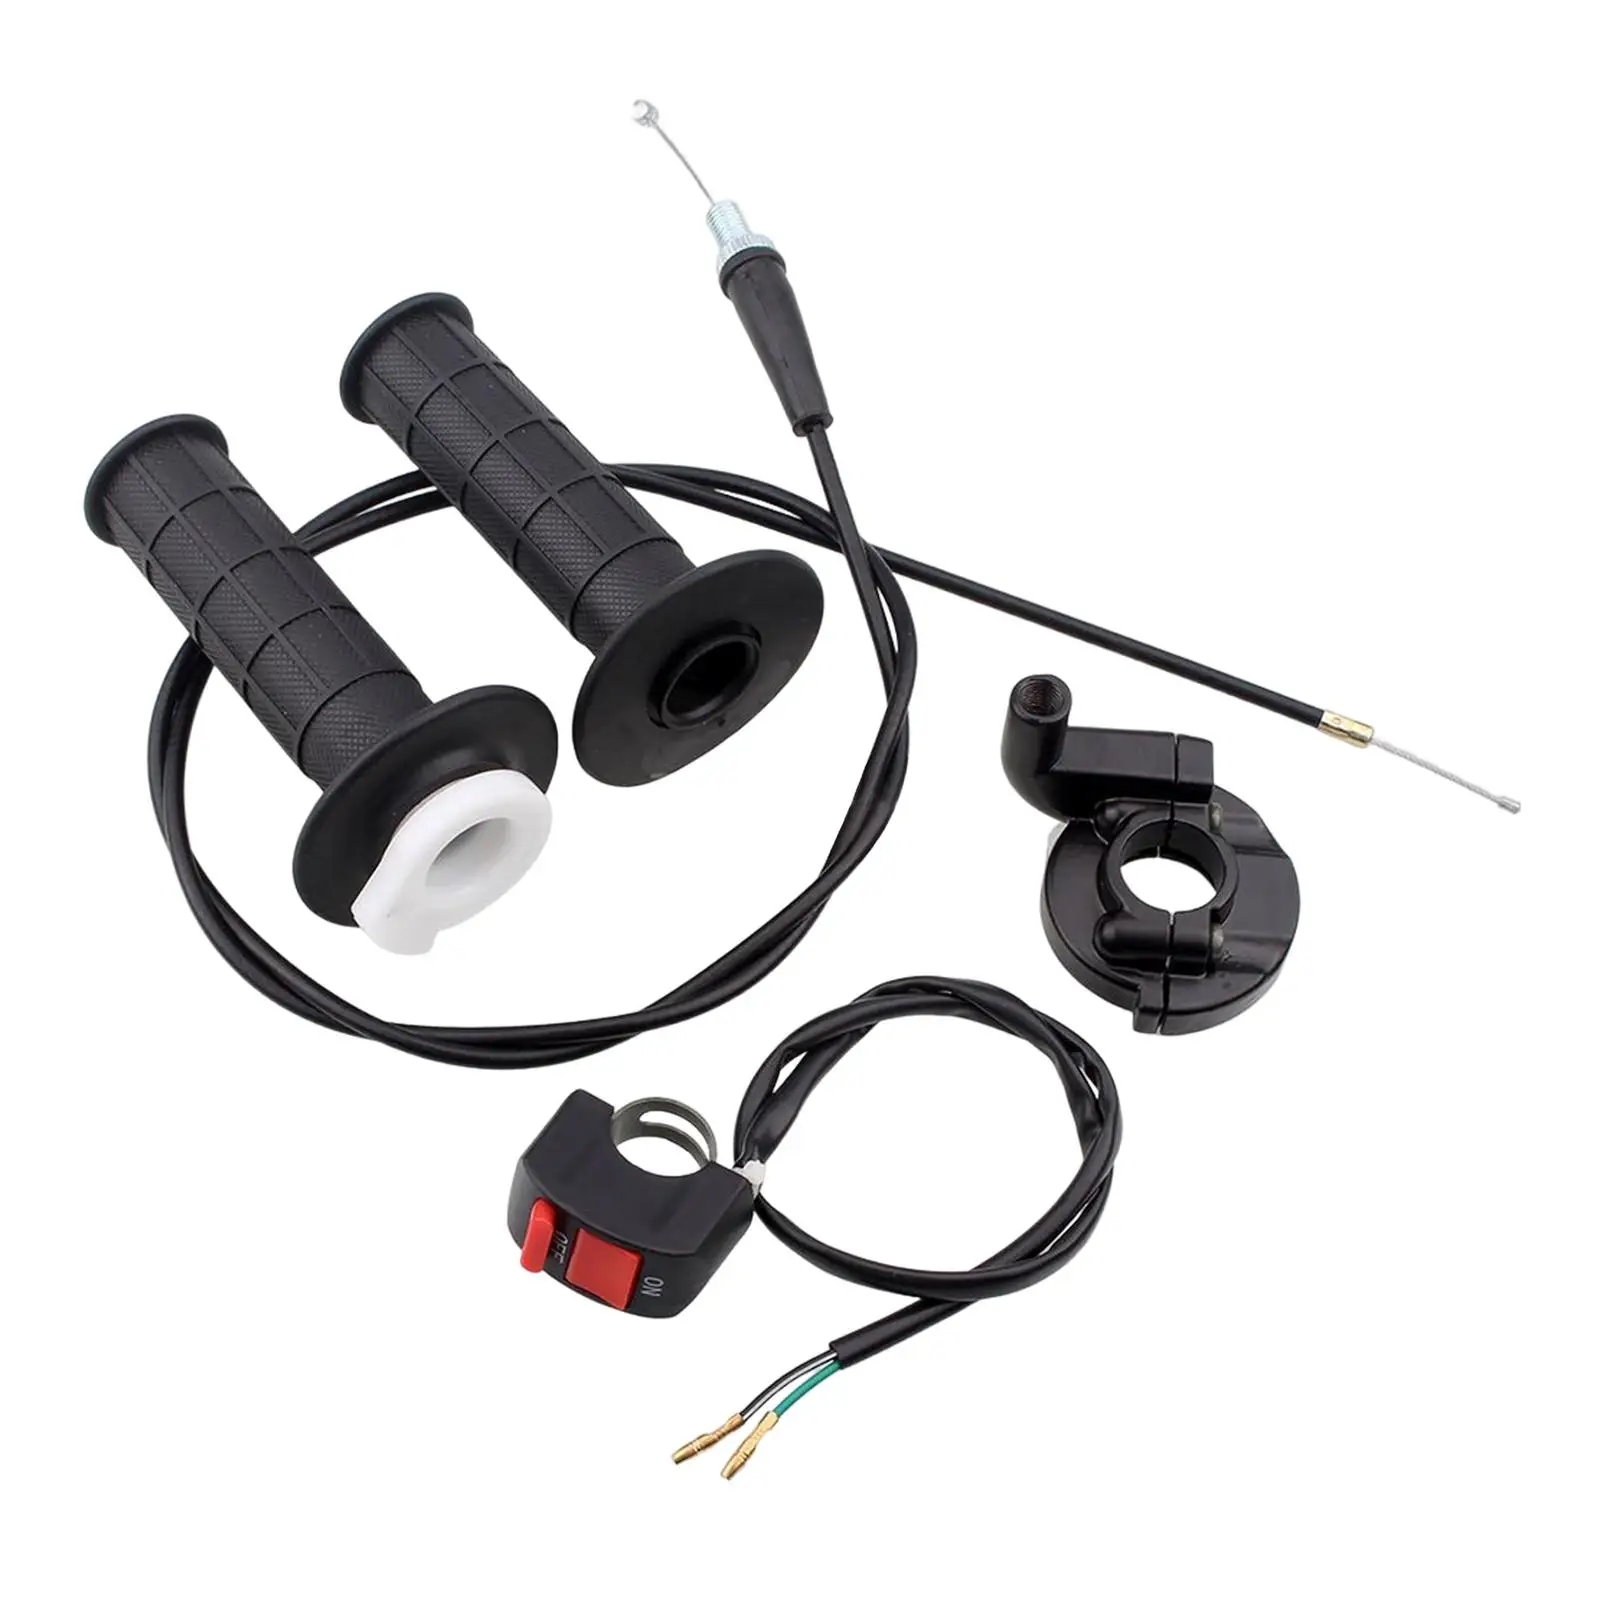 Throttle Accelerator Handle & Cable Kit for 50cc Mini Bike Accessories